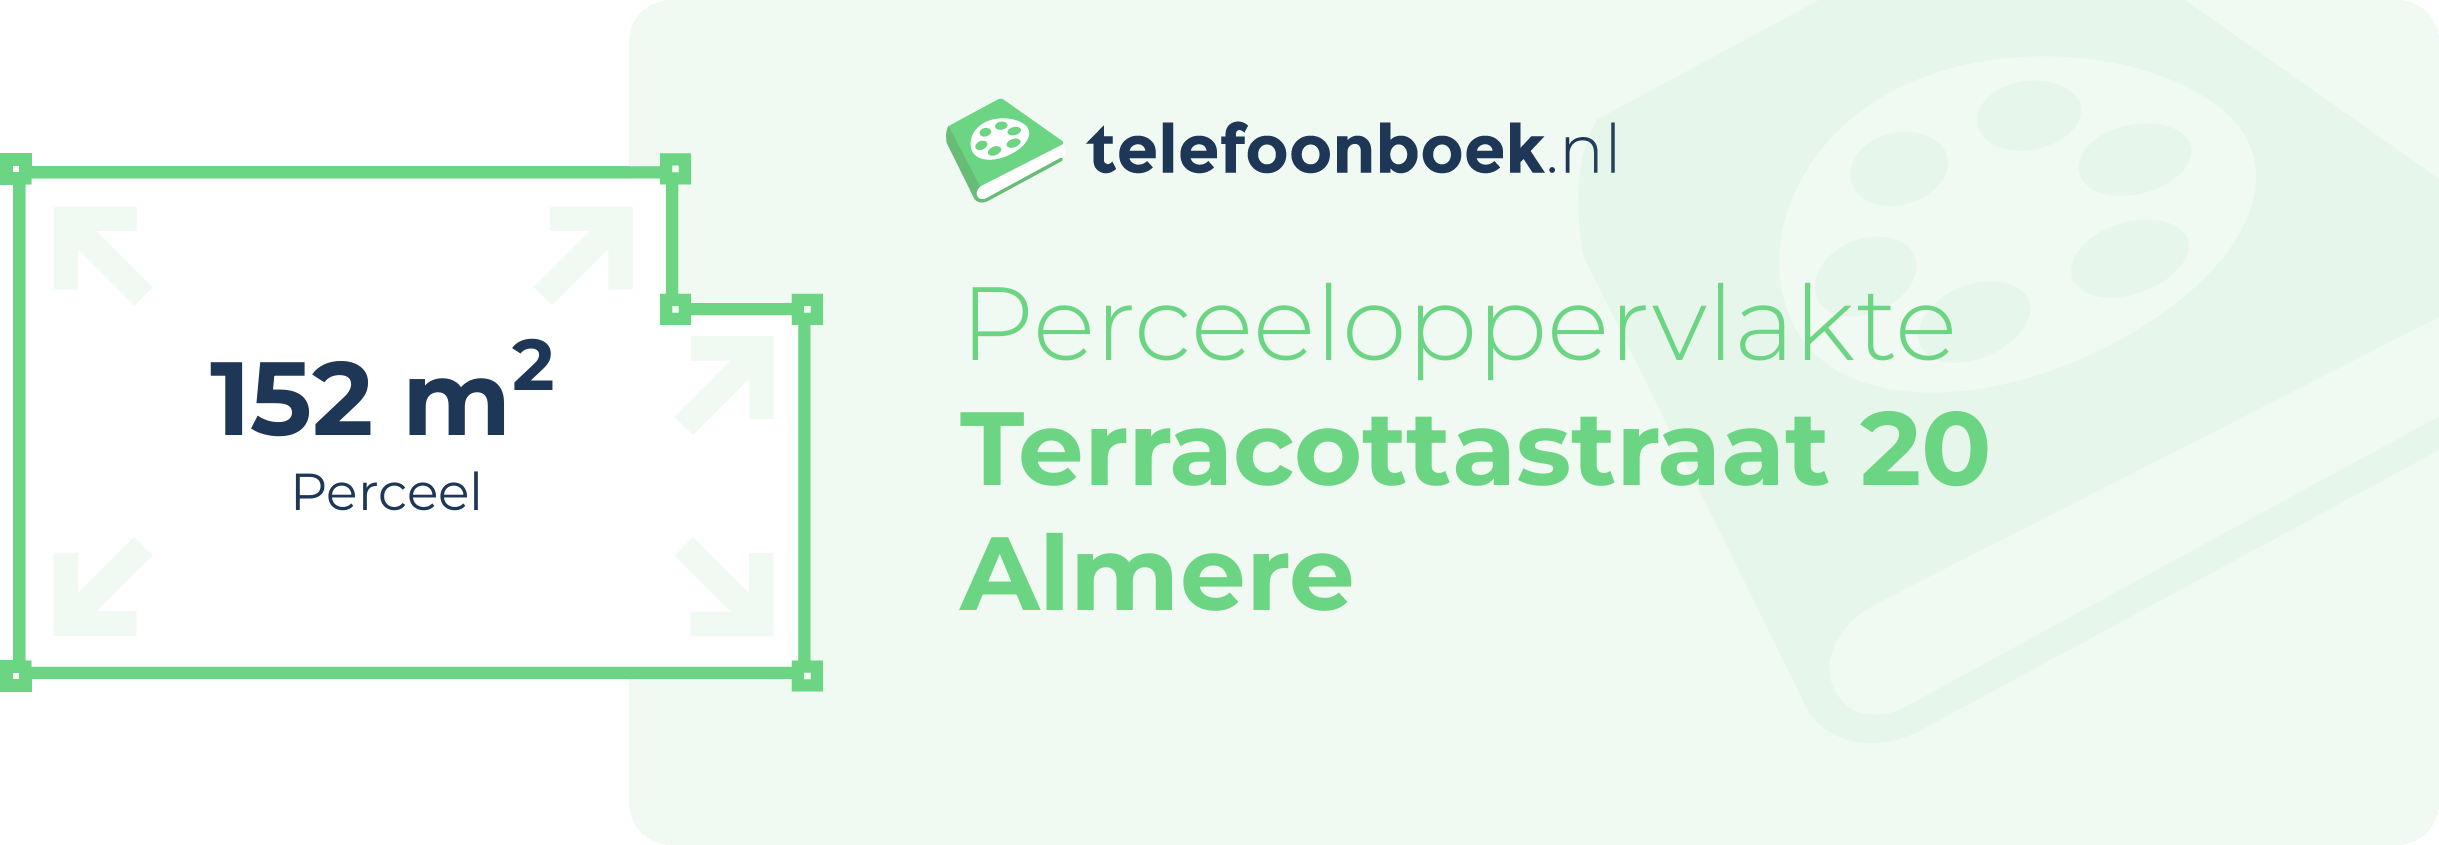 Perceeloppervlakte Terracottastraat 20 Almere